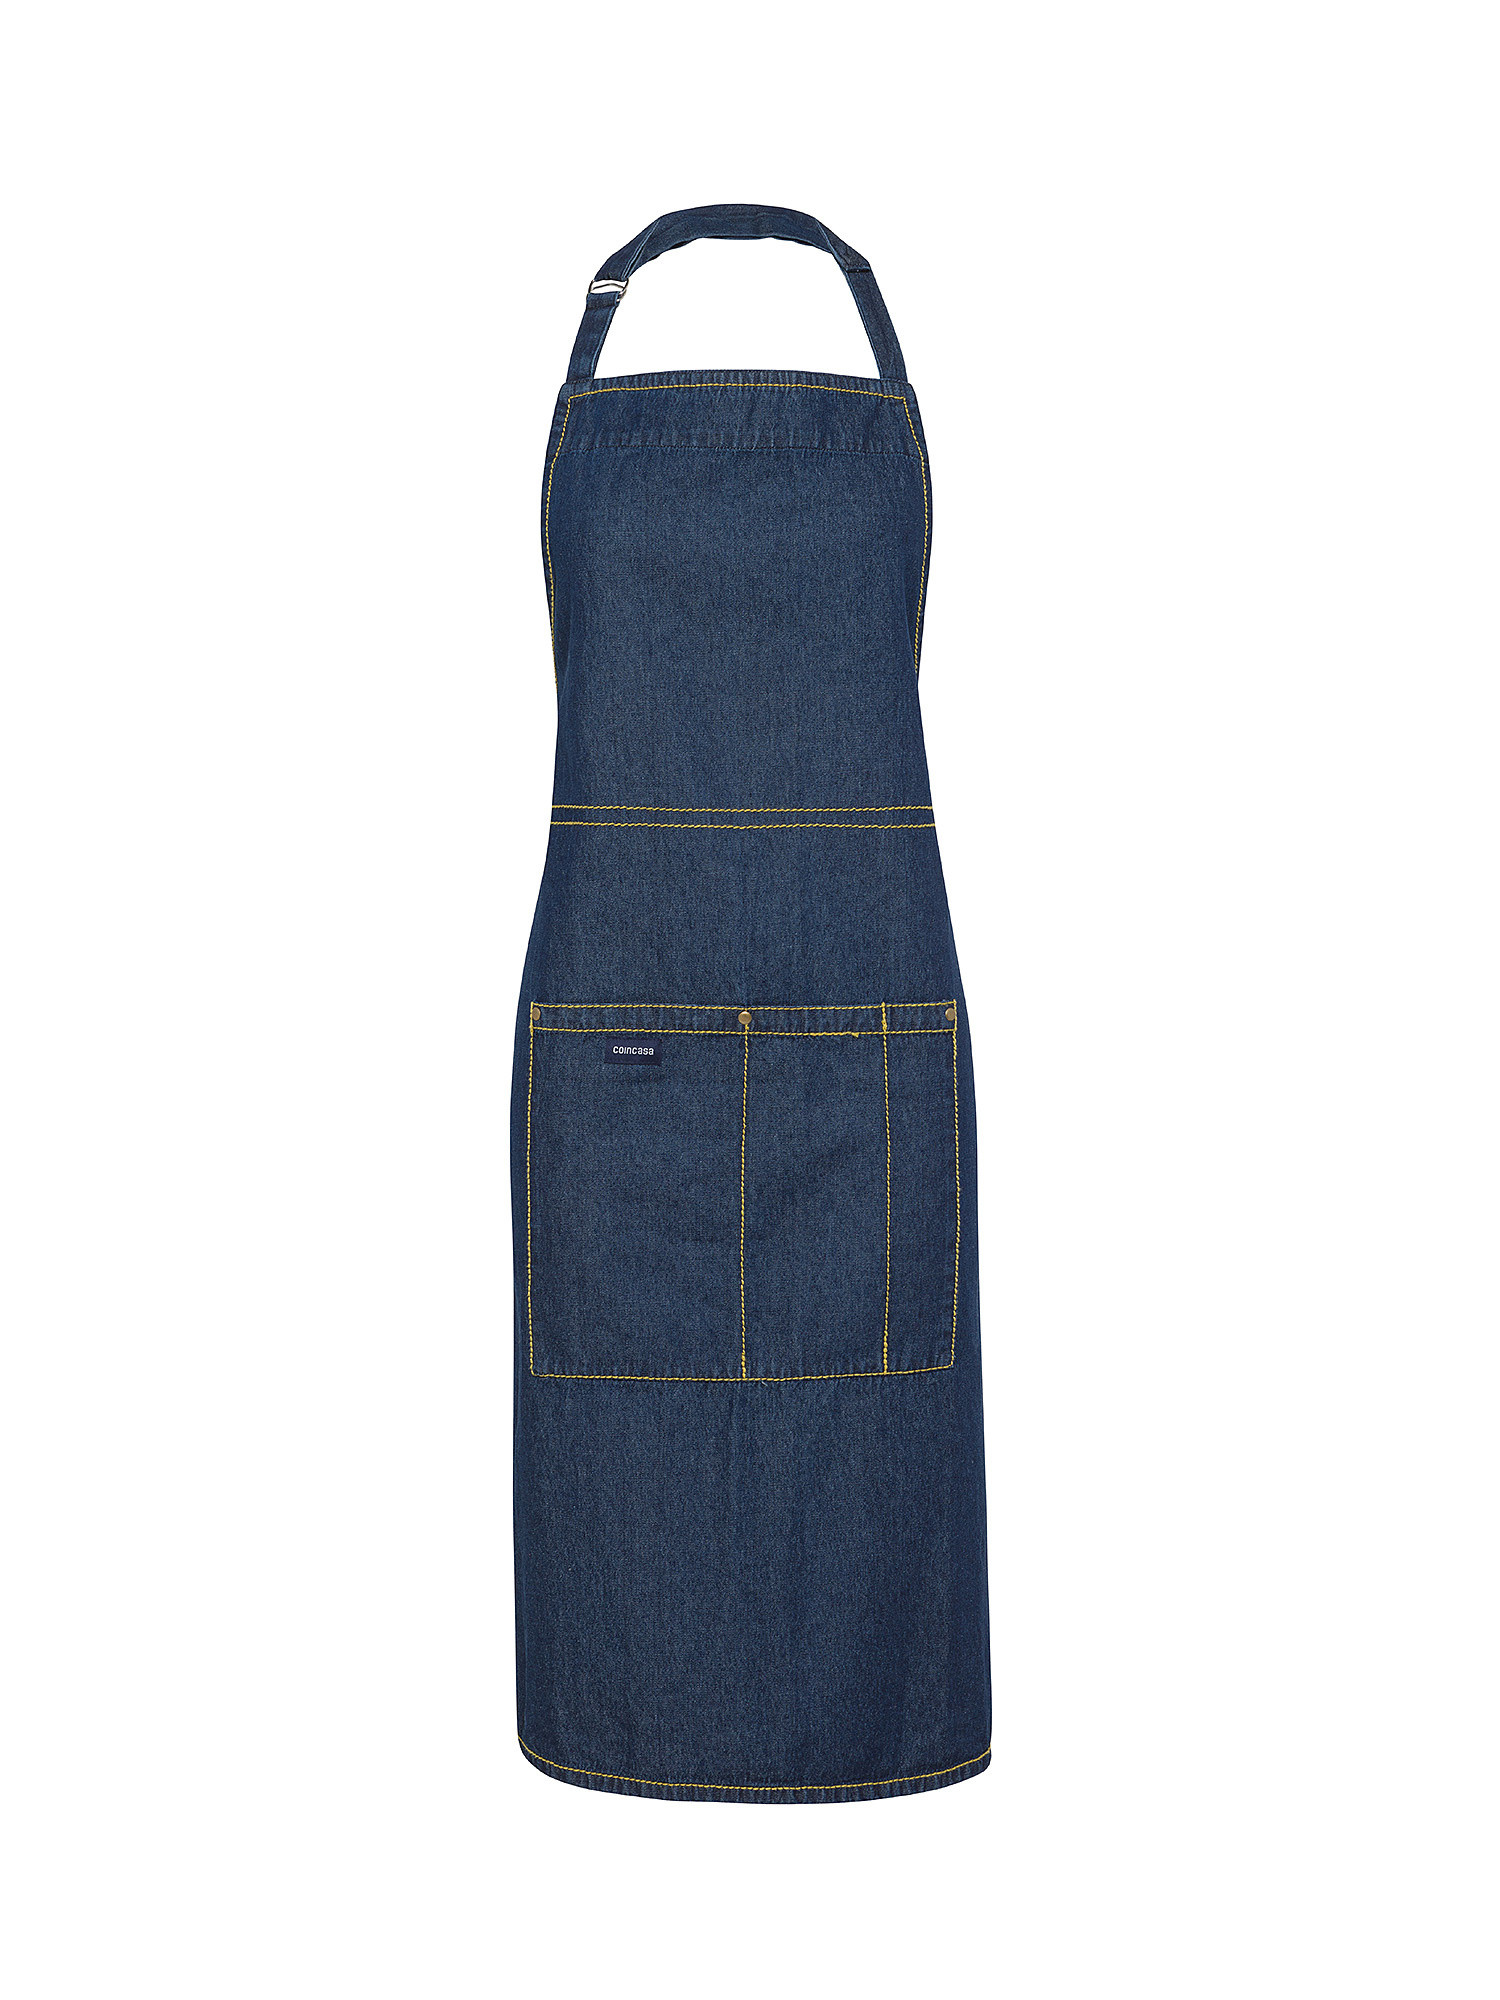 Cotton denim kitchen apron, Blue, large image number 0